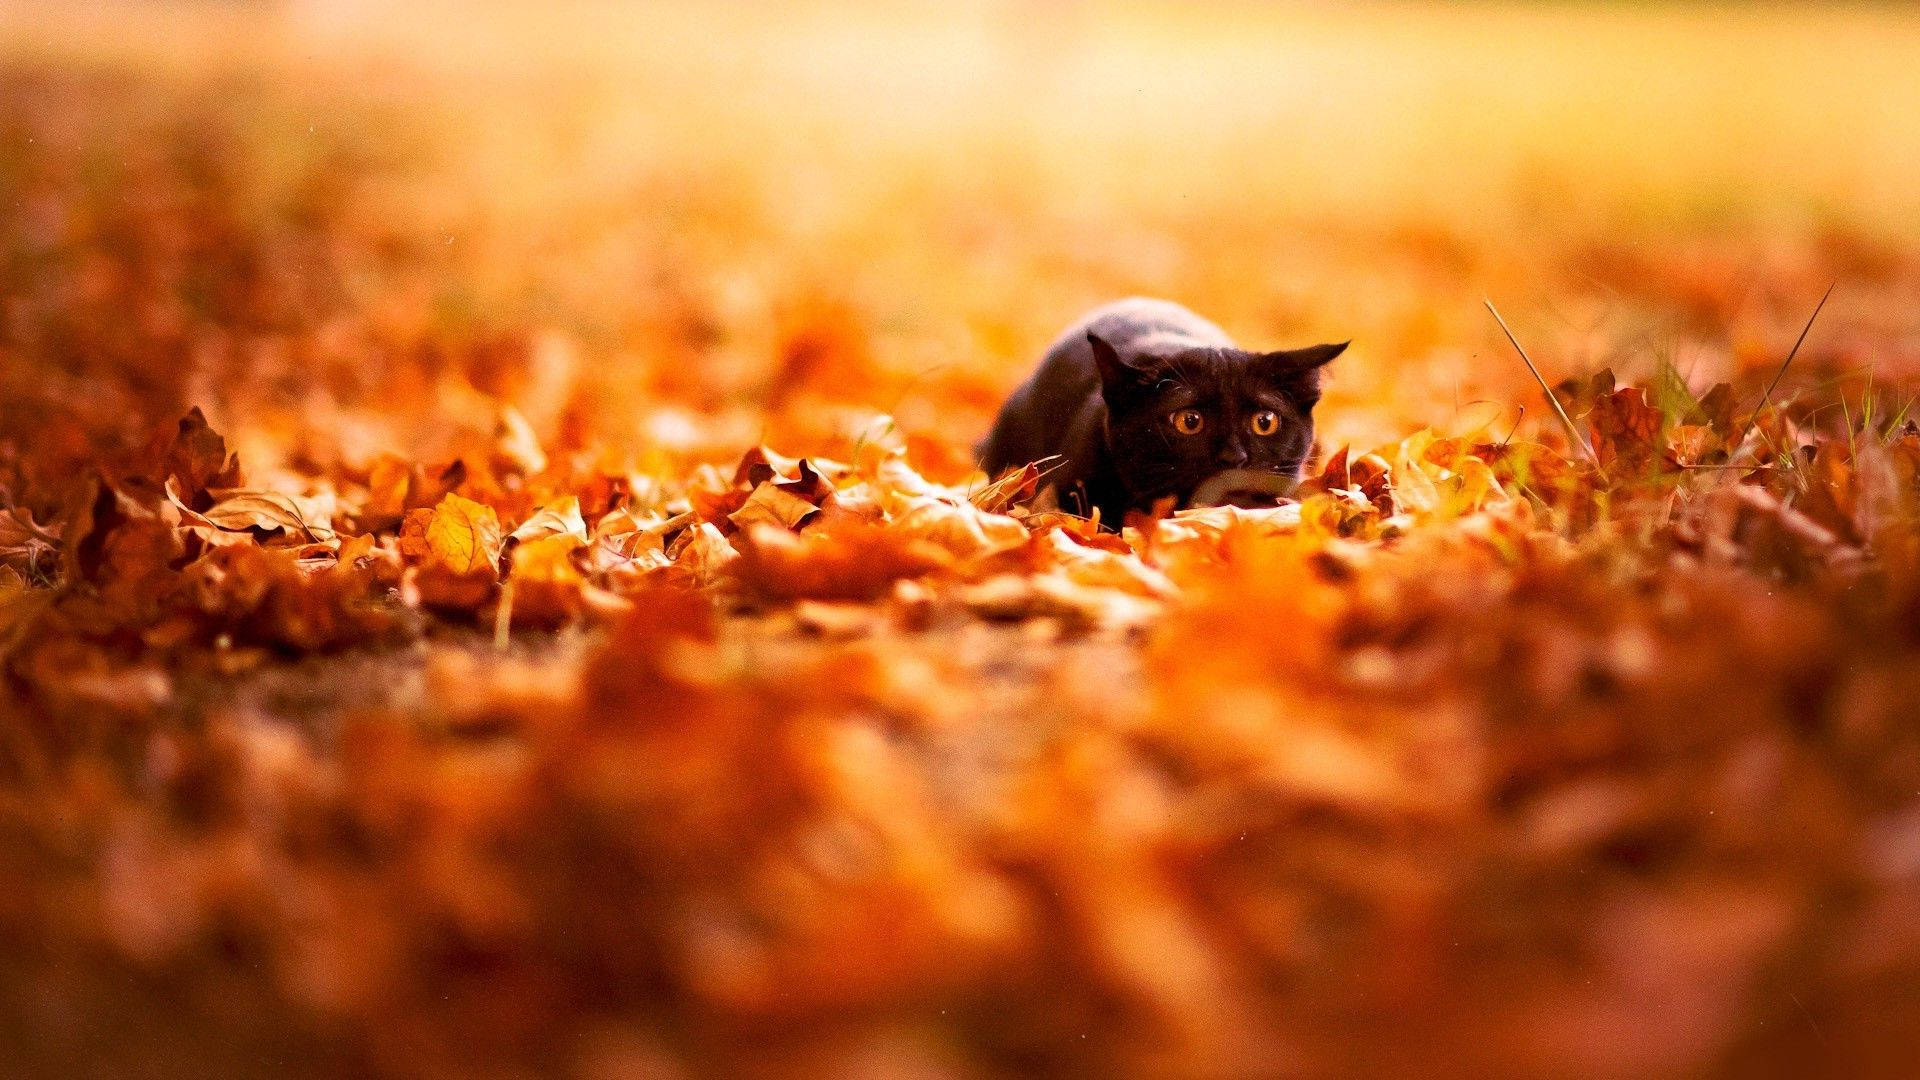 Black Cat In Fall Season Wallpaper